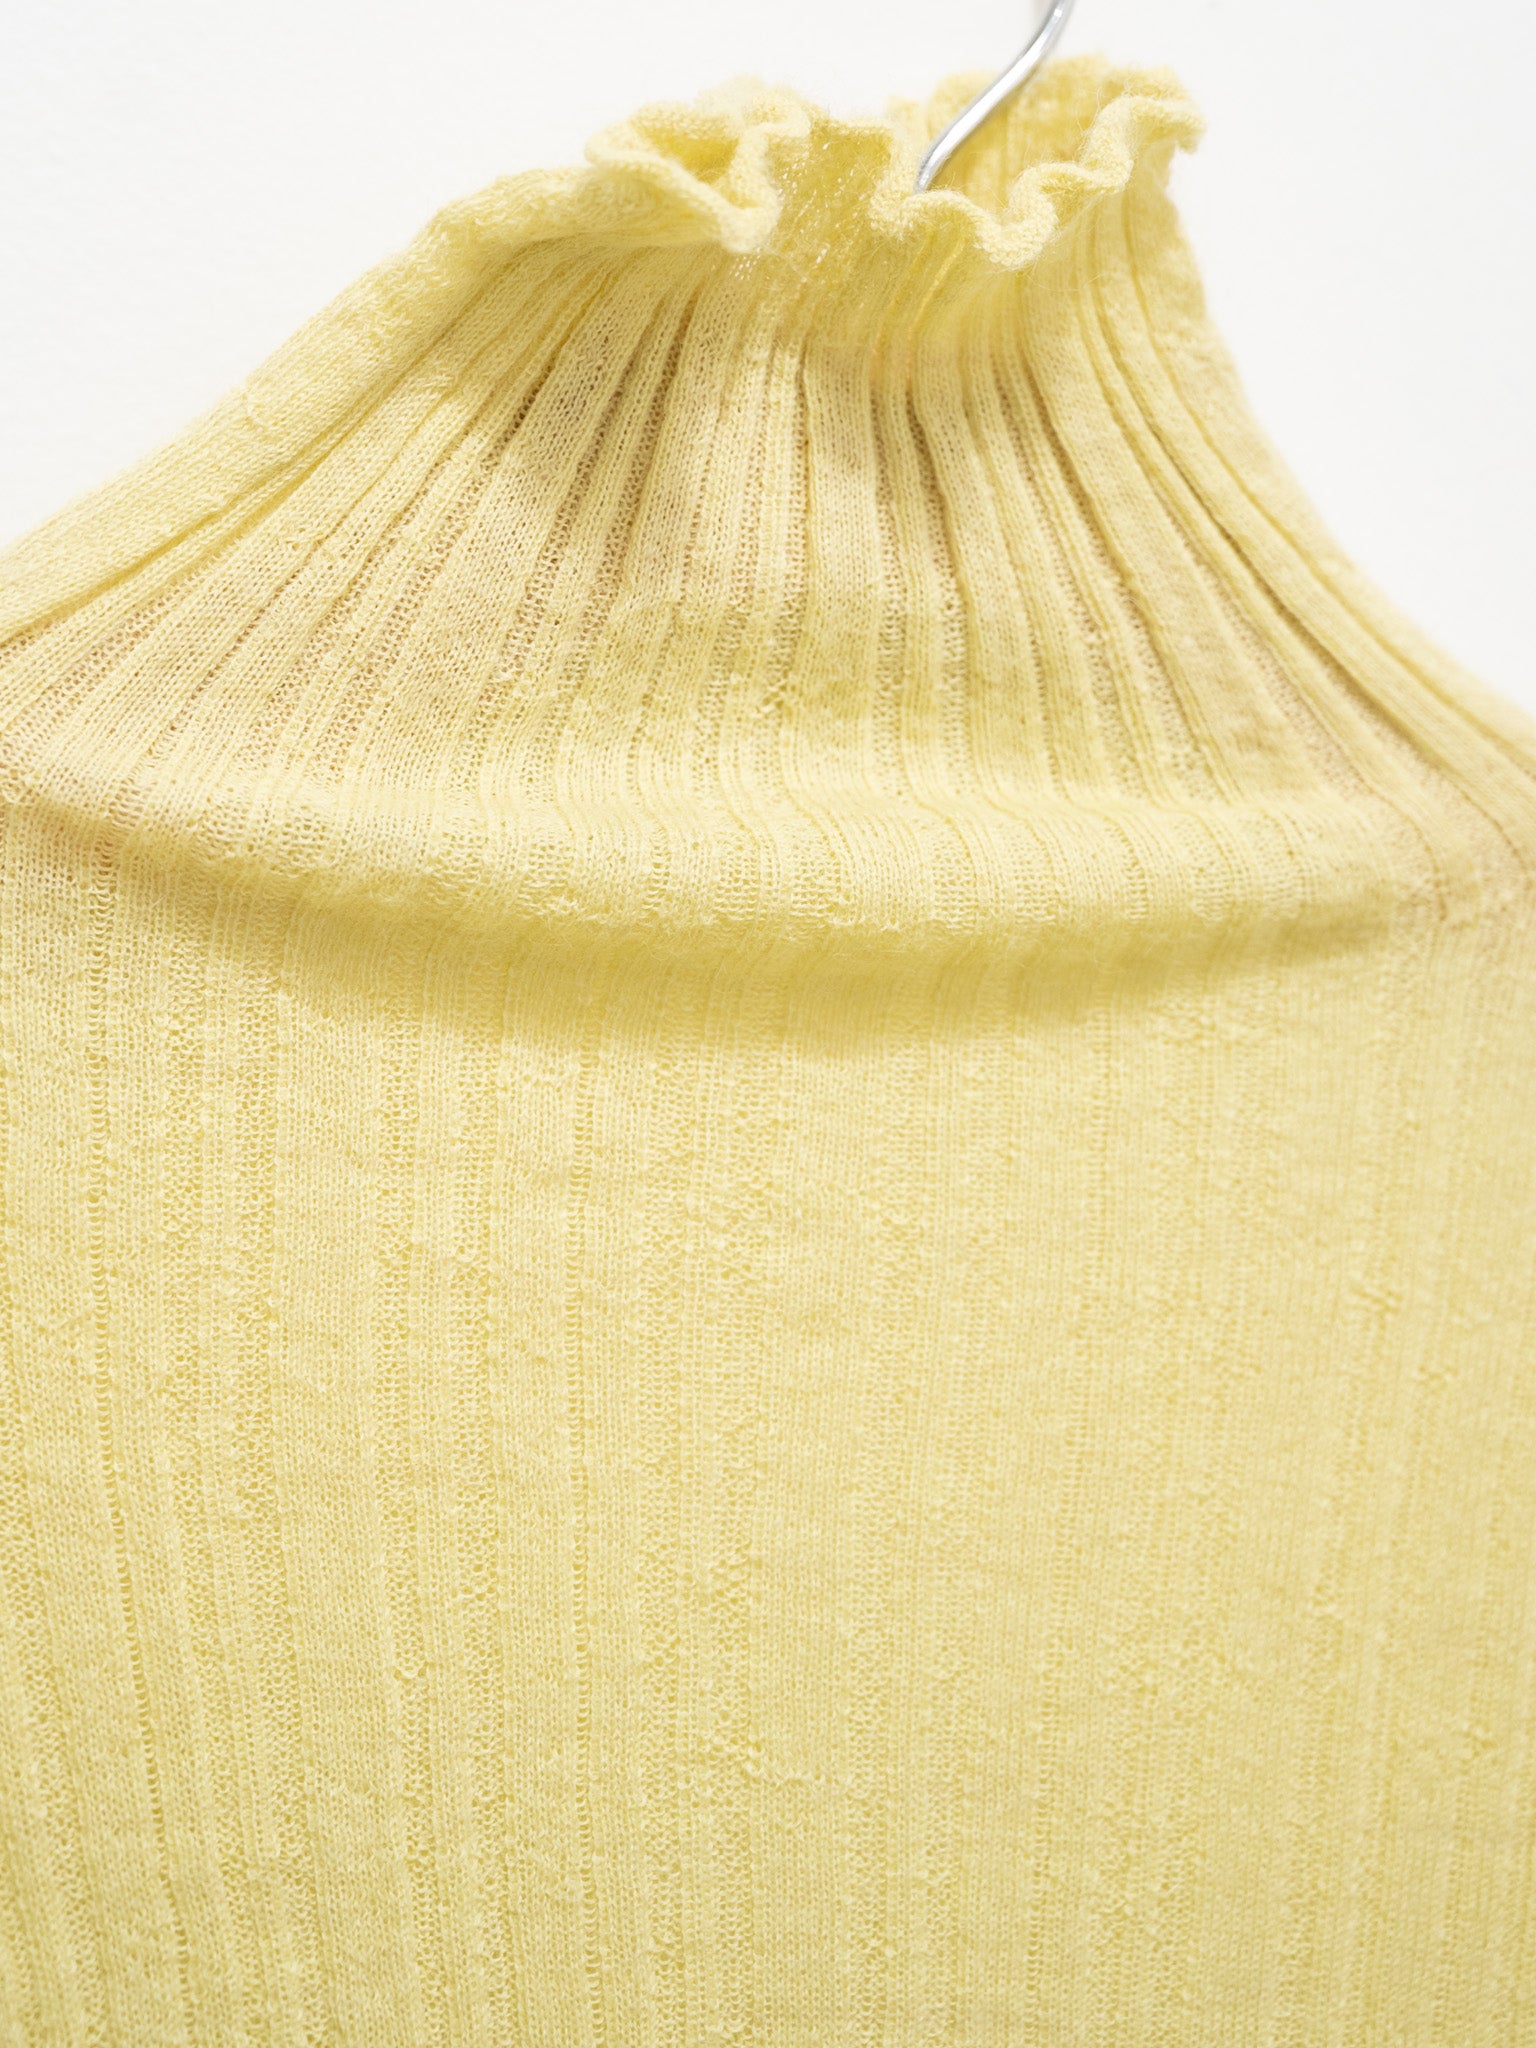 Namu Shop - Unfil Baby Suri Alpaca High Neck Sweater - Lemon Yellow